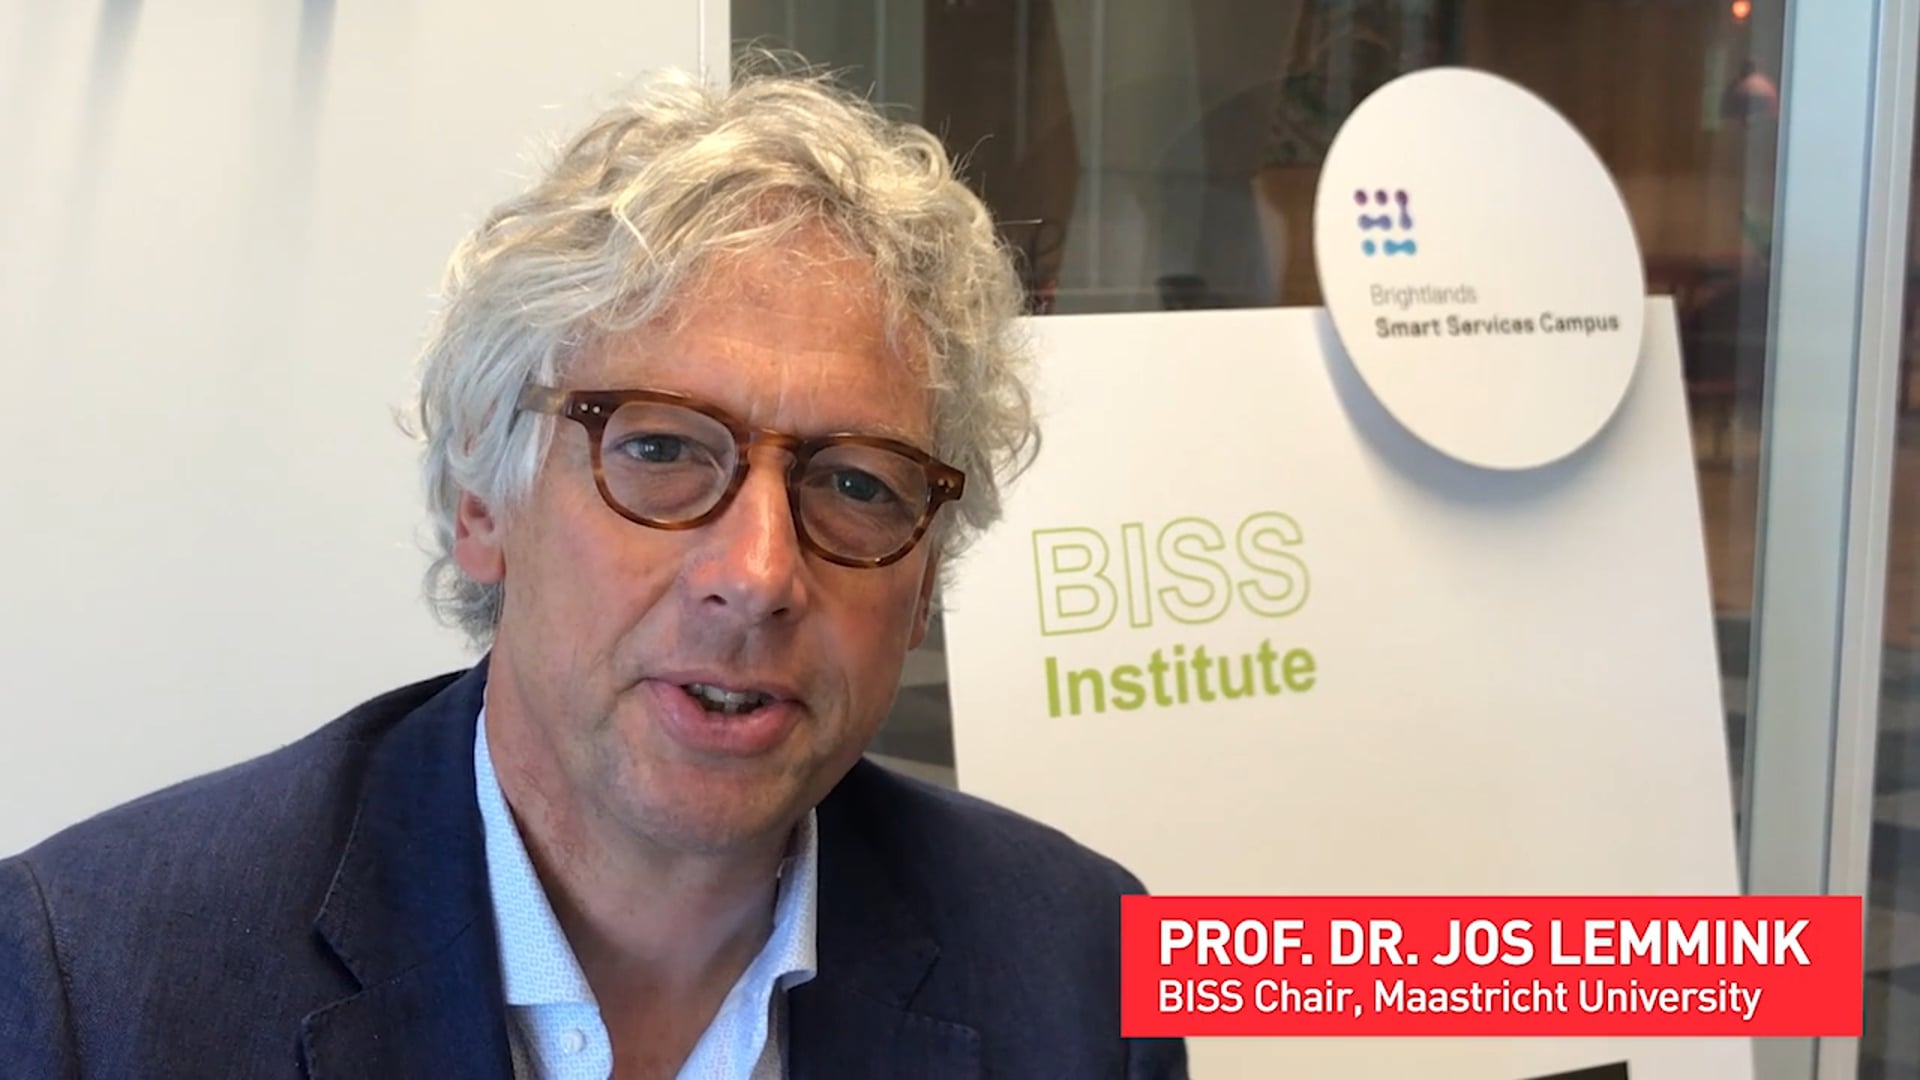 Prof. Dr. Jos Lemmink, BISS Institute